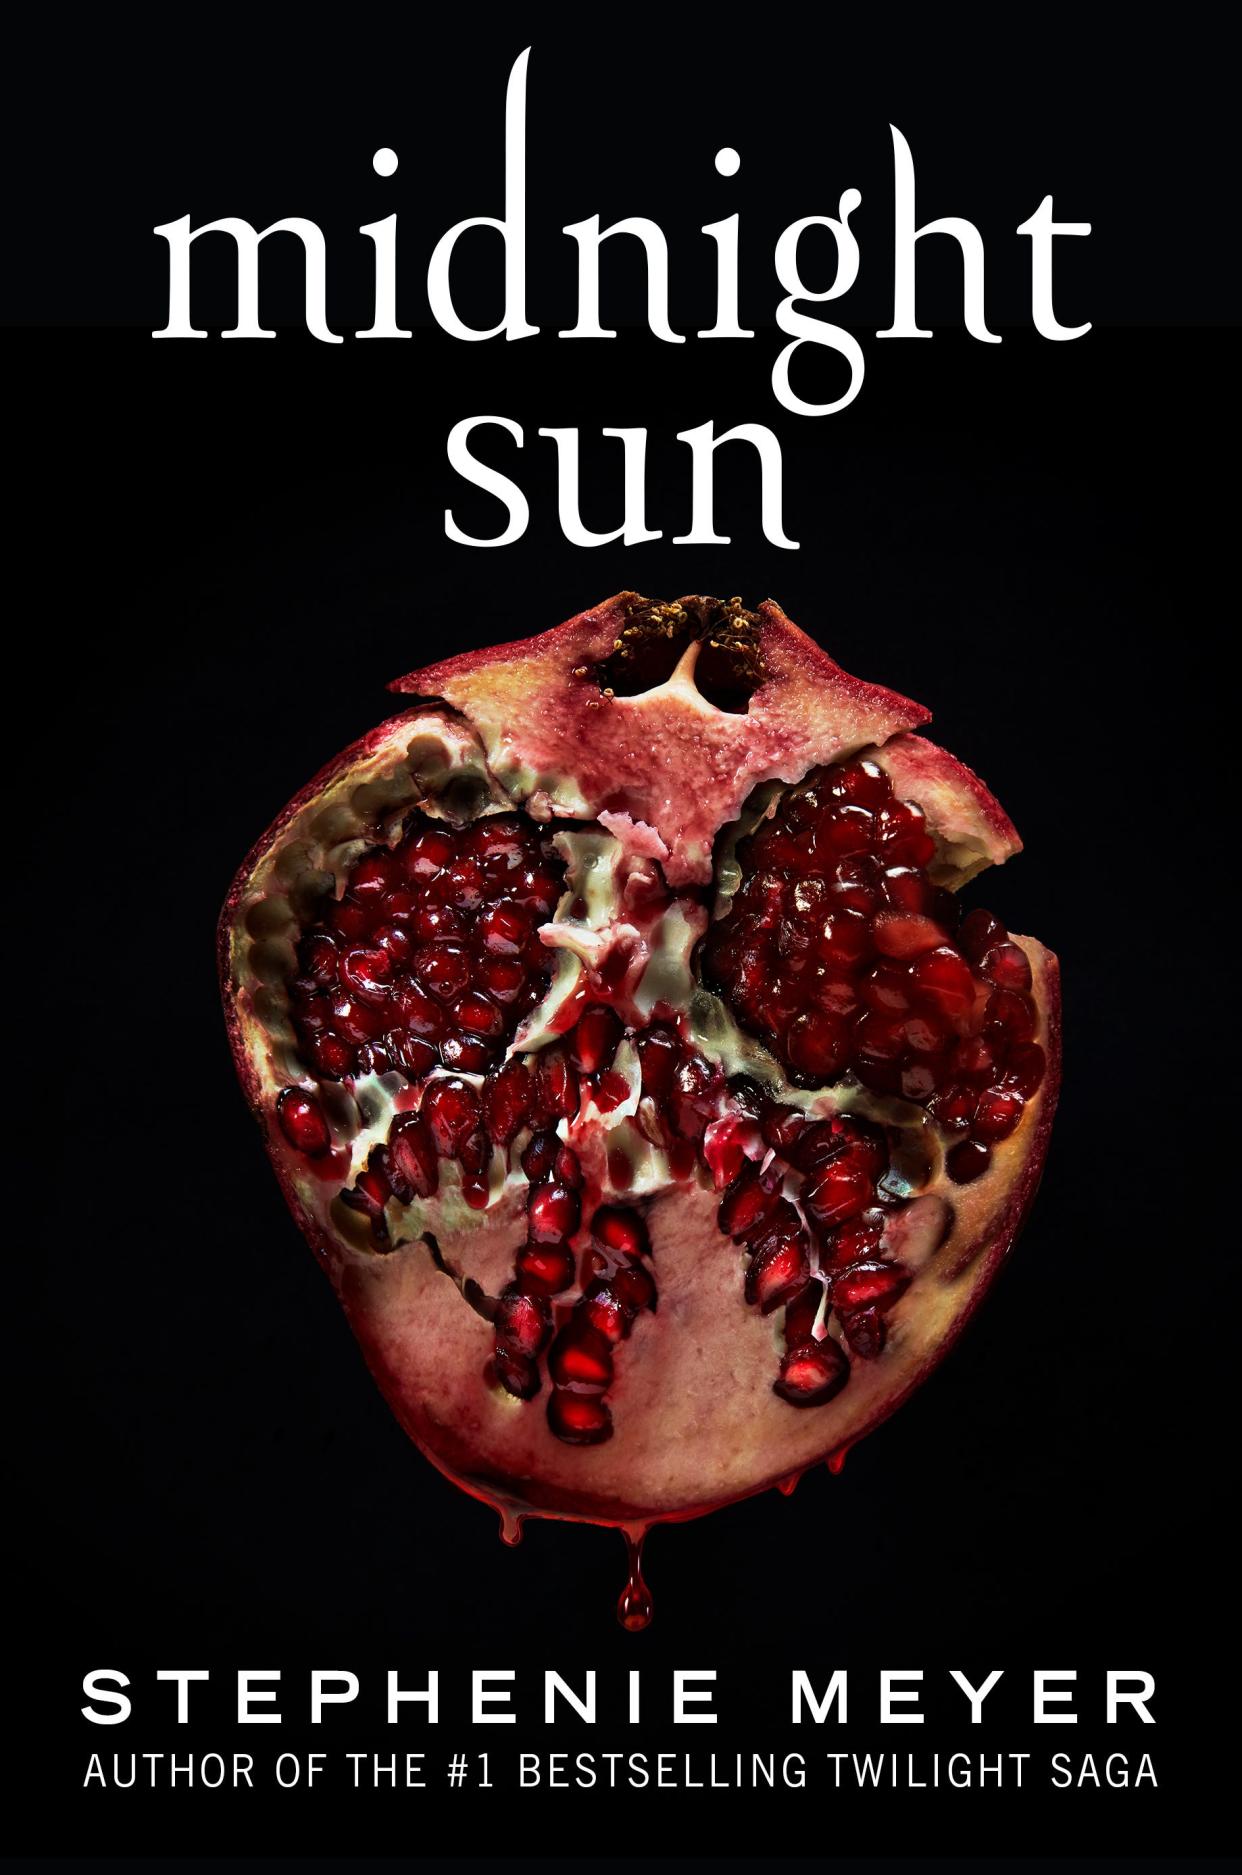 "Midnight Sun," by Stephenie Meyer.